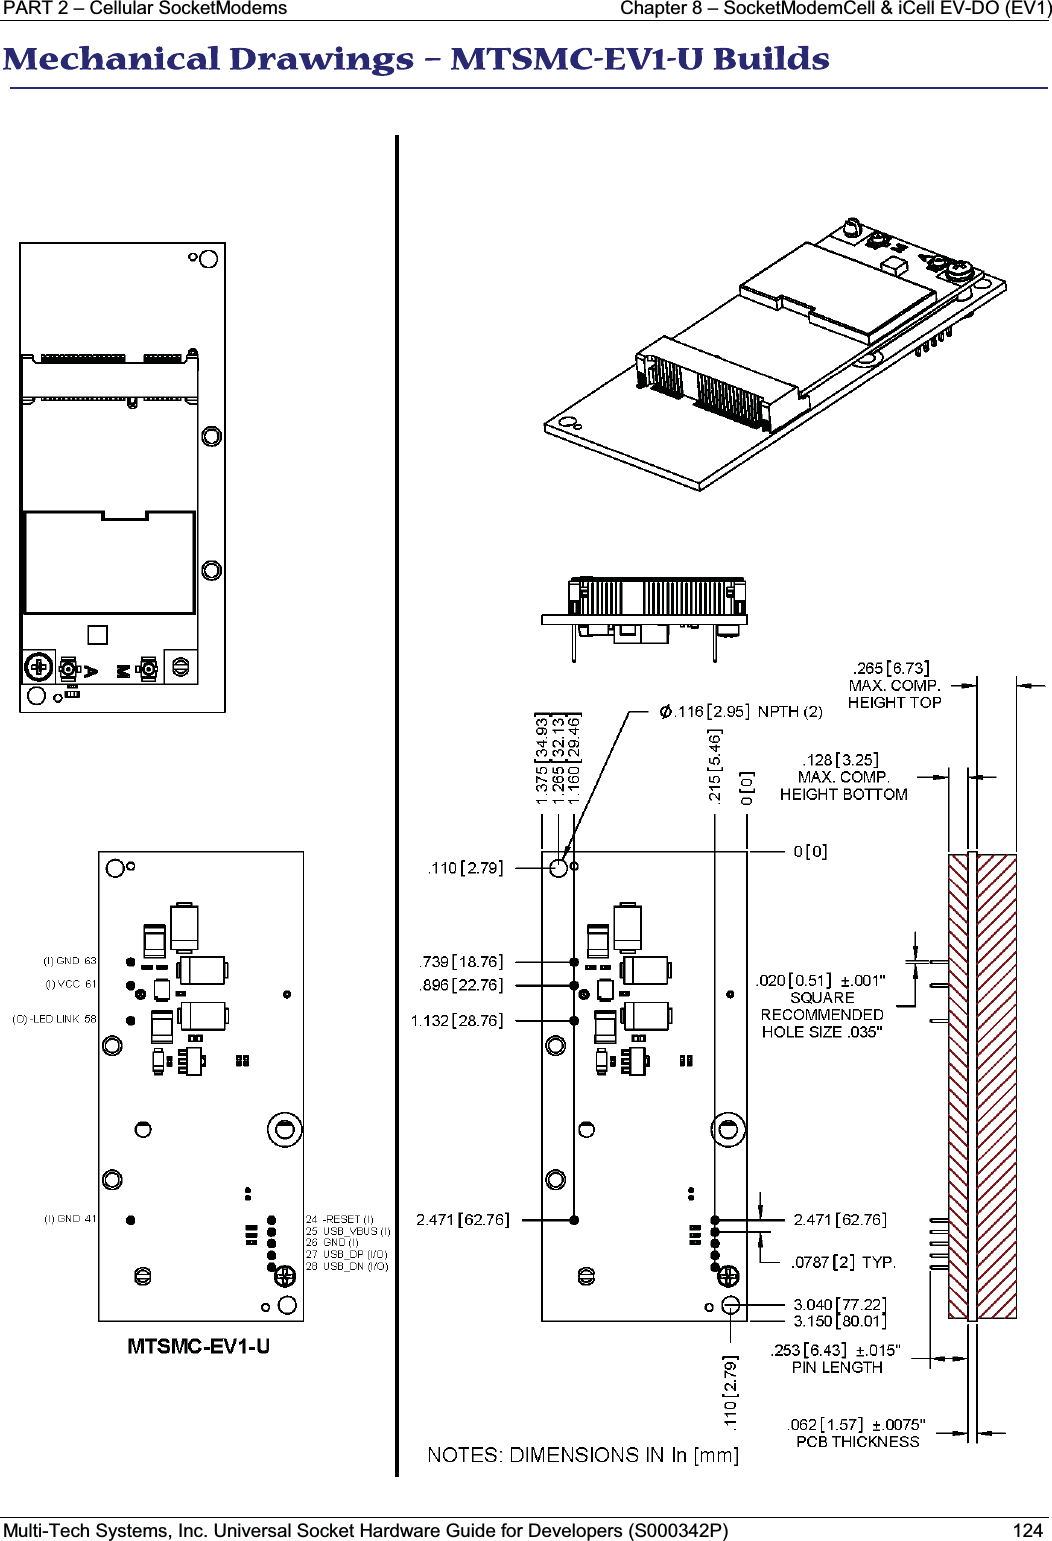 PART 2 – Cellular SocketModems Chapter 8 – SocketModemCell &amp; iCell EV-DO (EV1)Multi-Tech Systems, Inc. Universal Socket Hardware Guide for Developers (S000342P) 124MMechanical Drawings – MTSMC-EV1-U Builds 